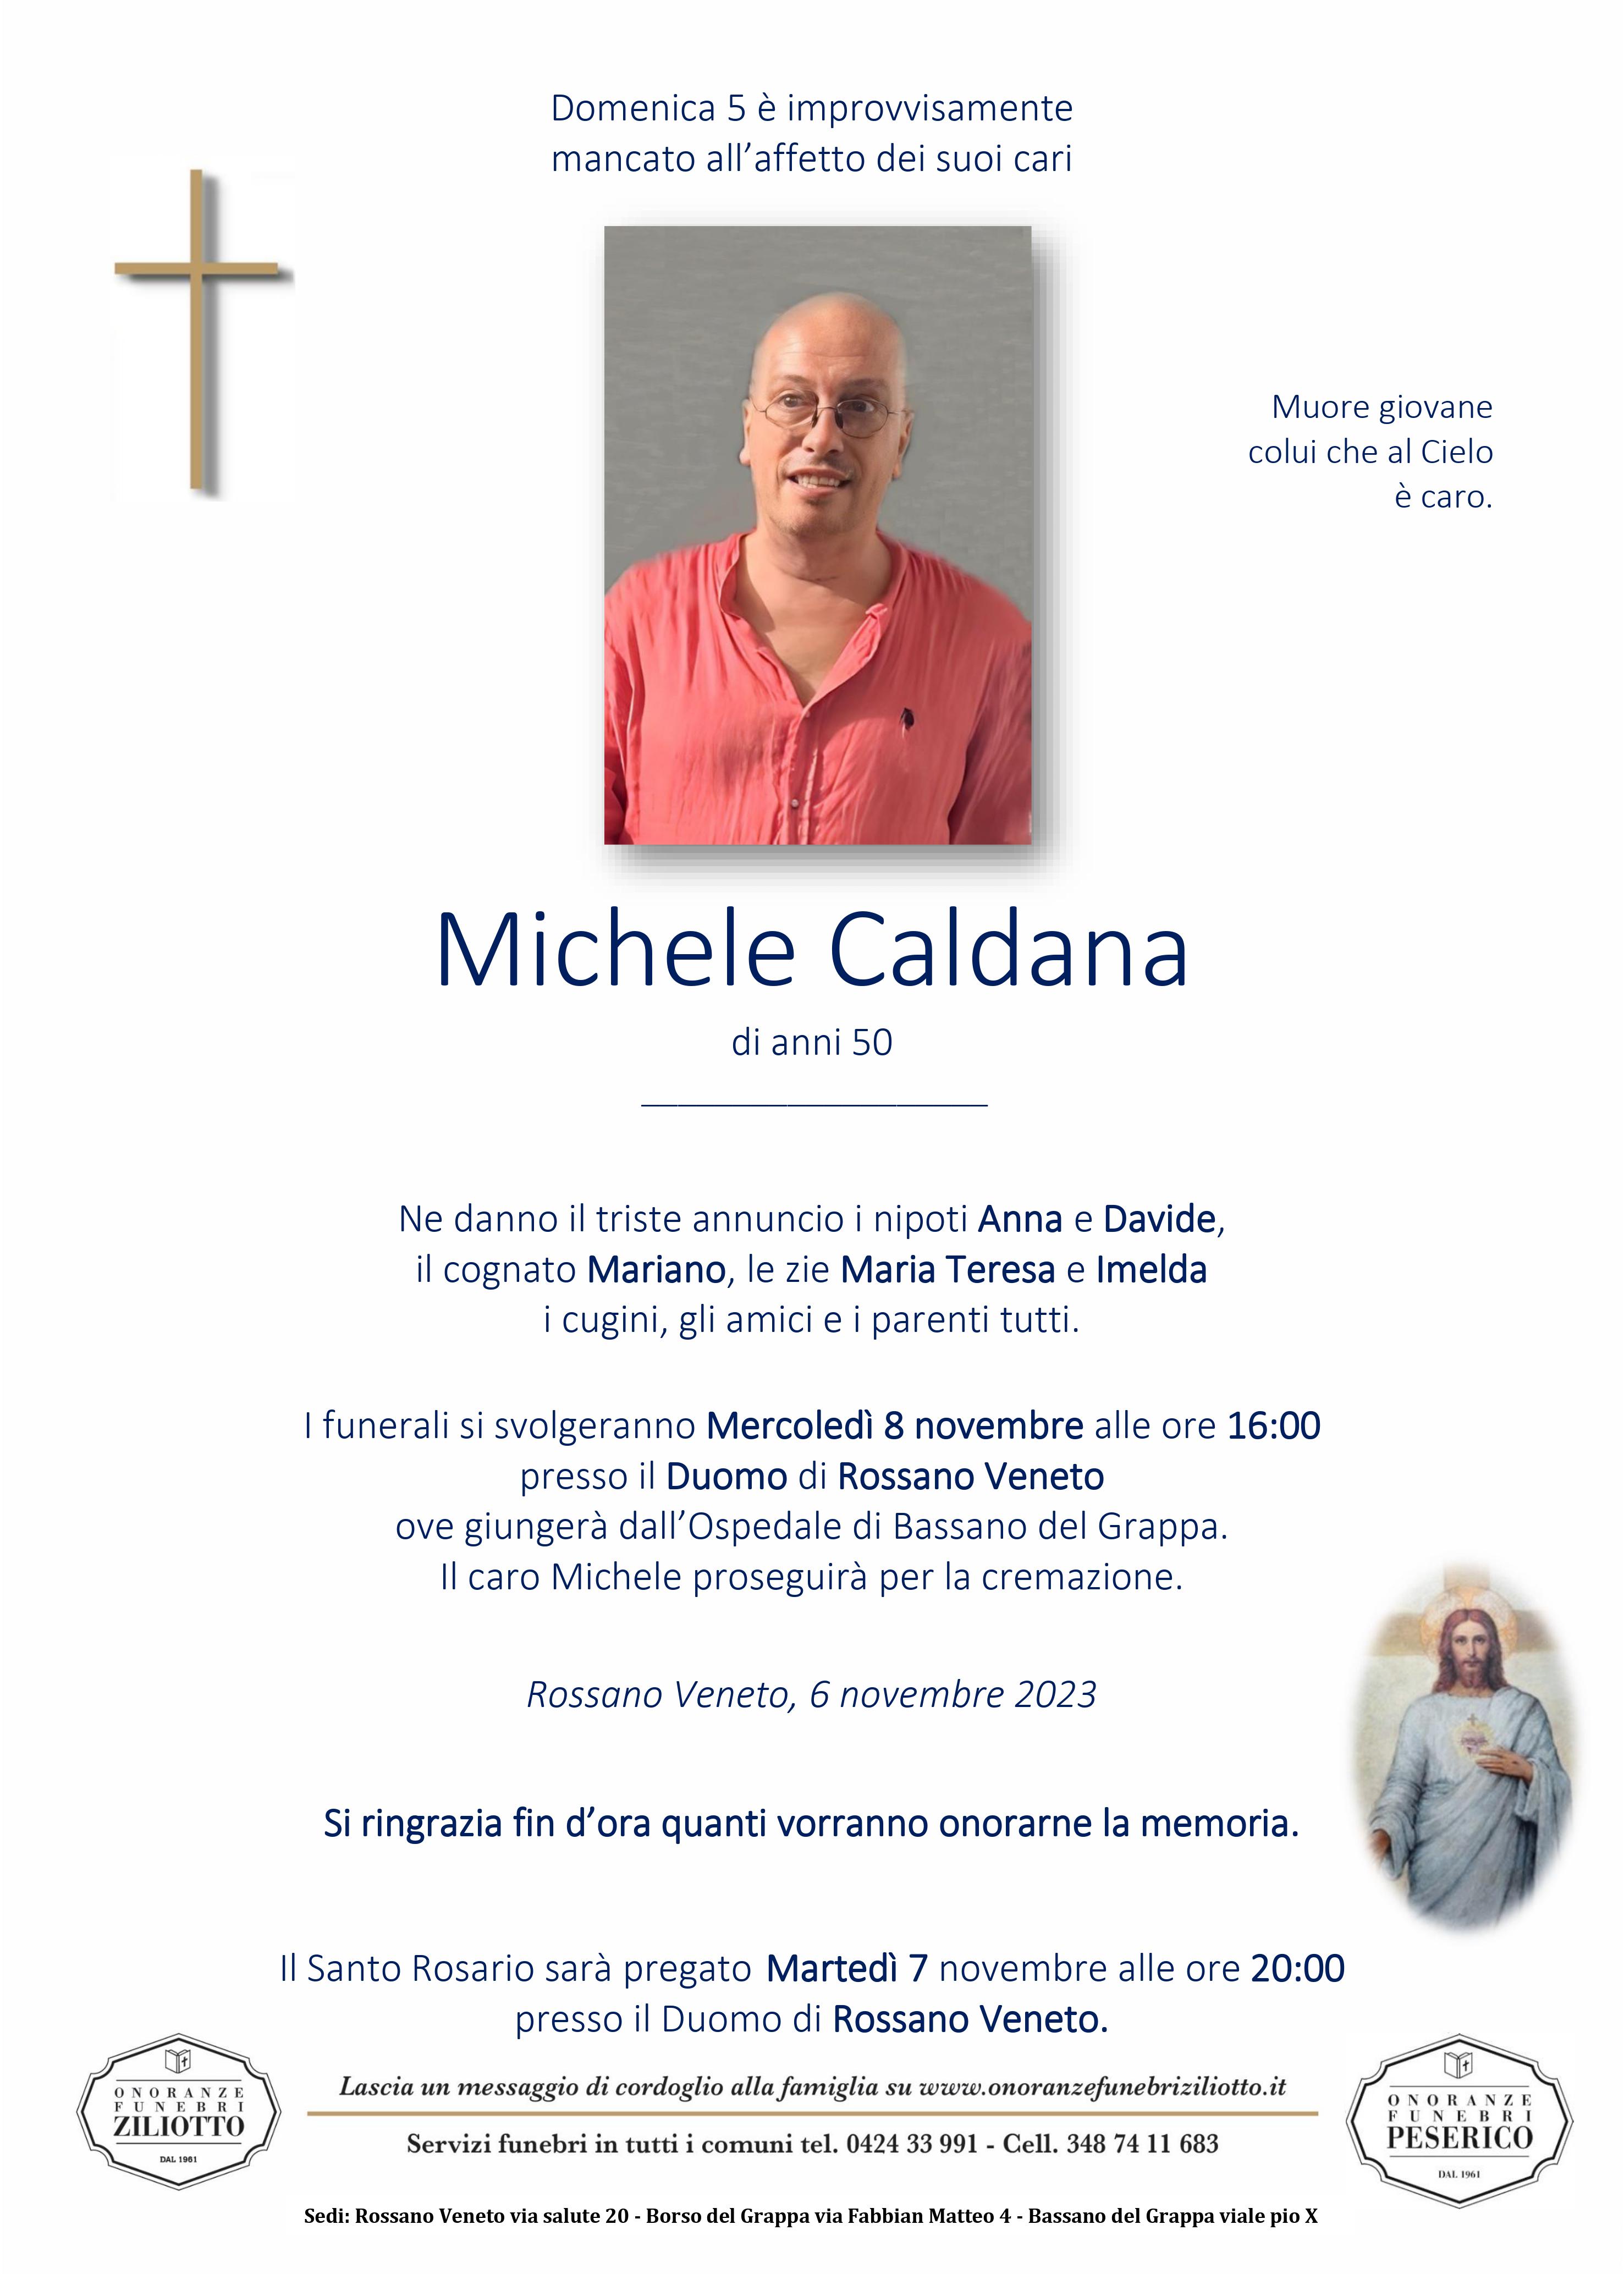 Michele Caldana - 50 anni - Rossano Veneto